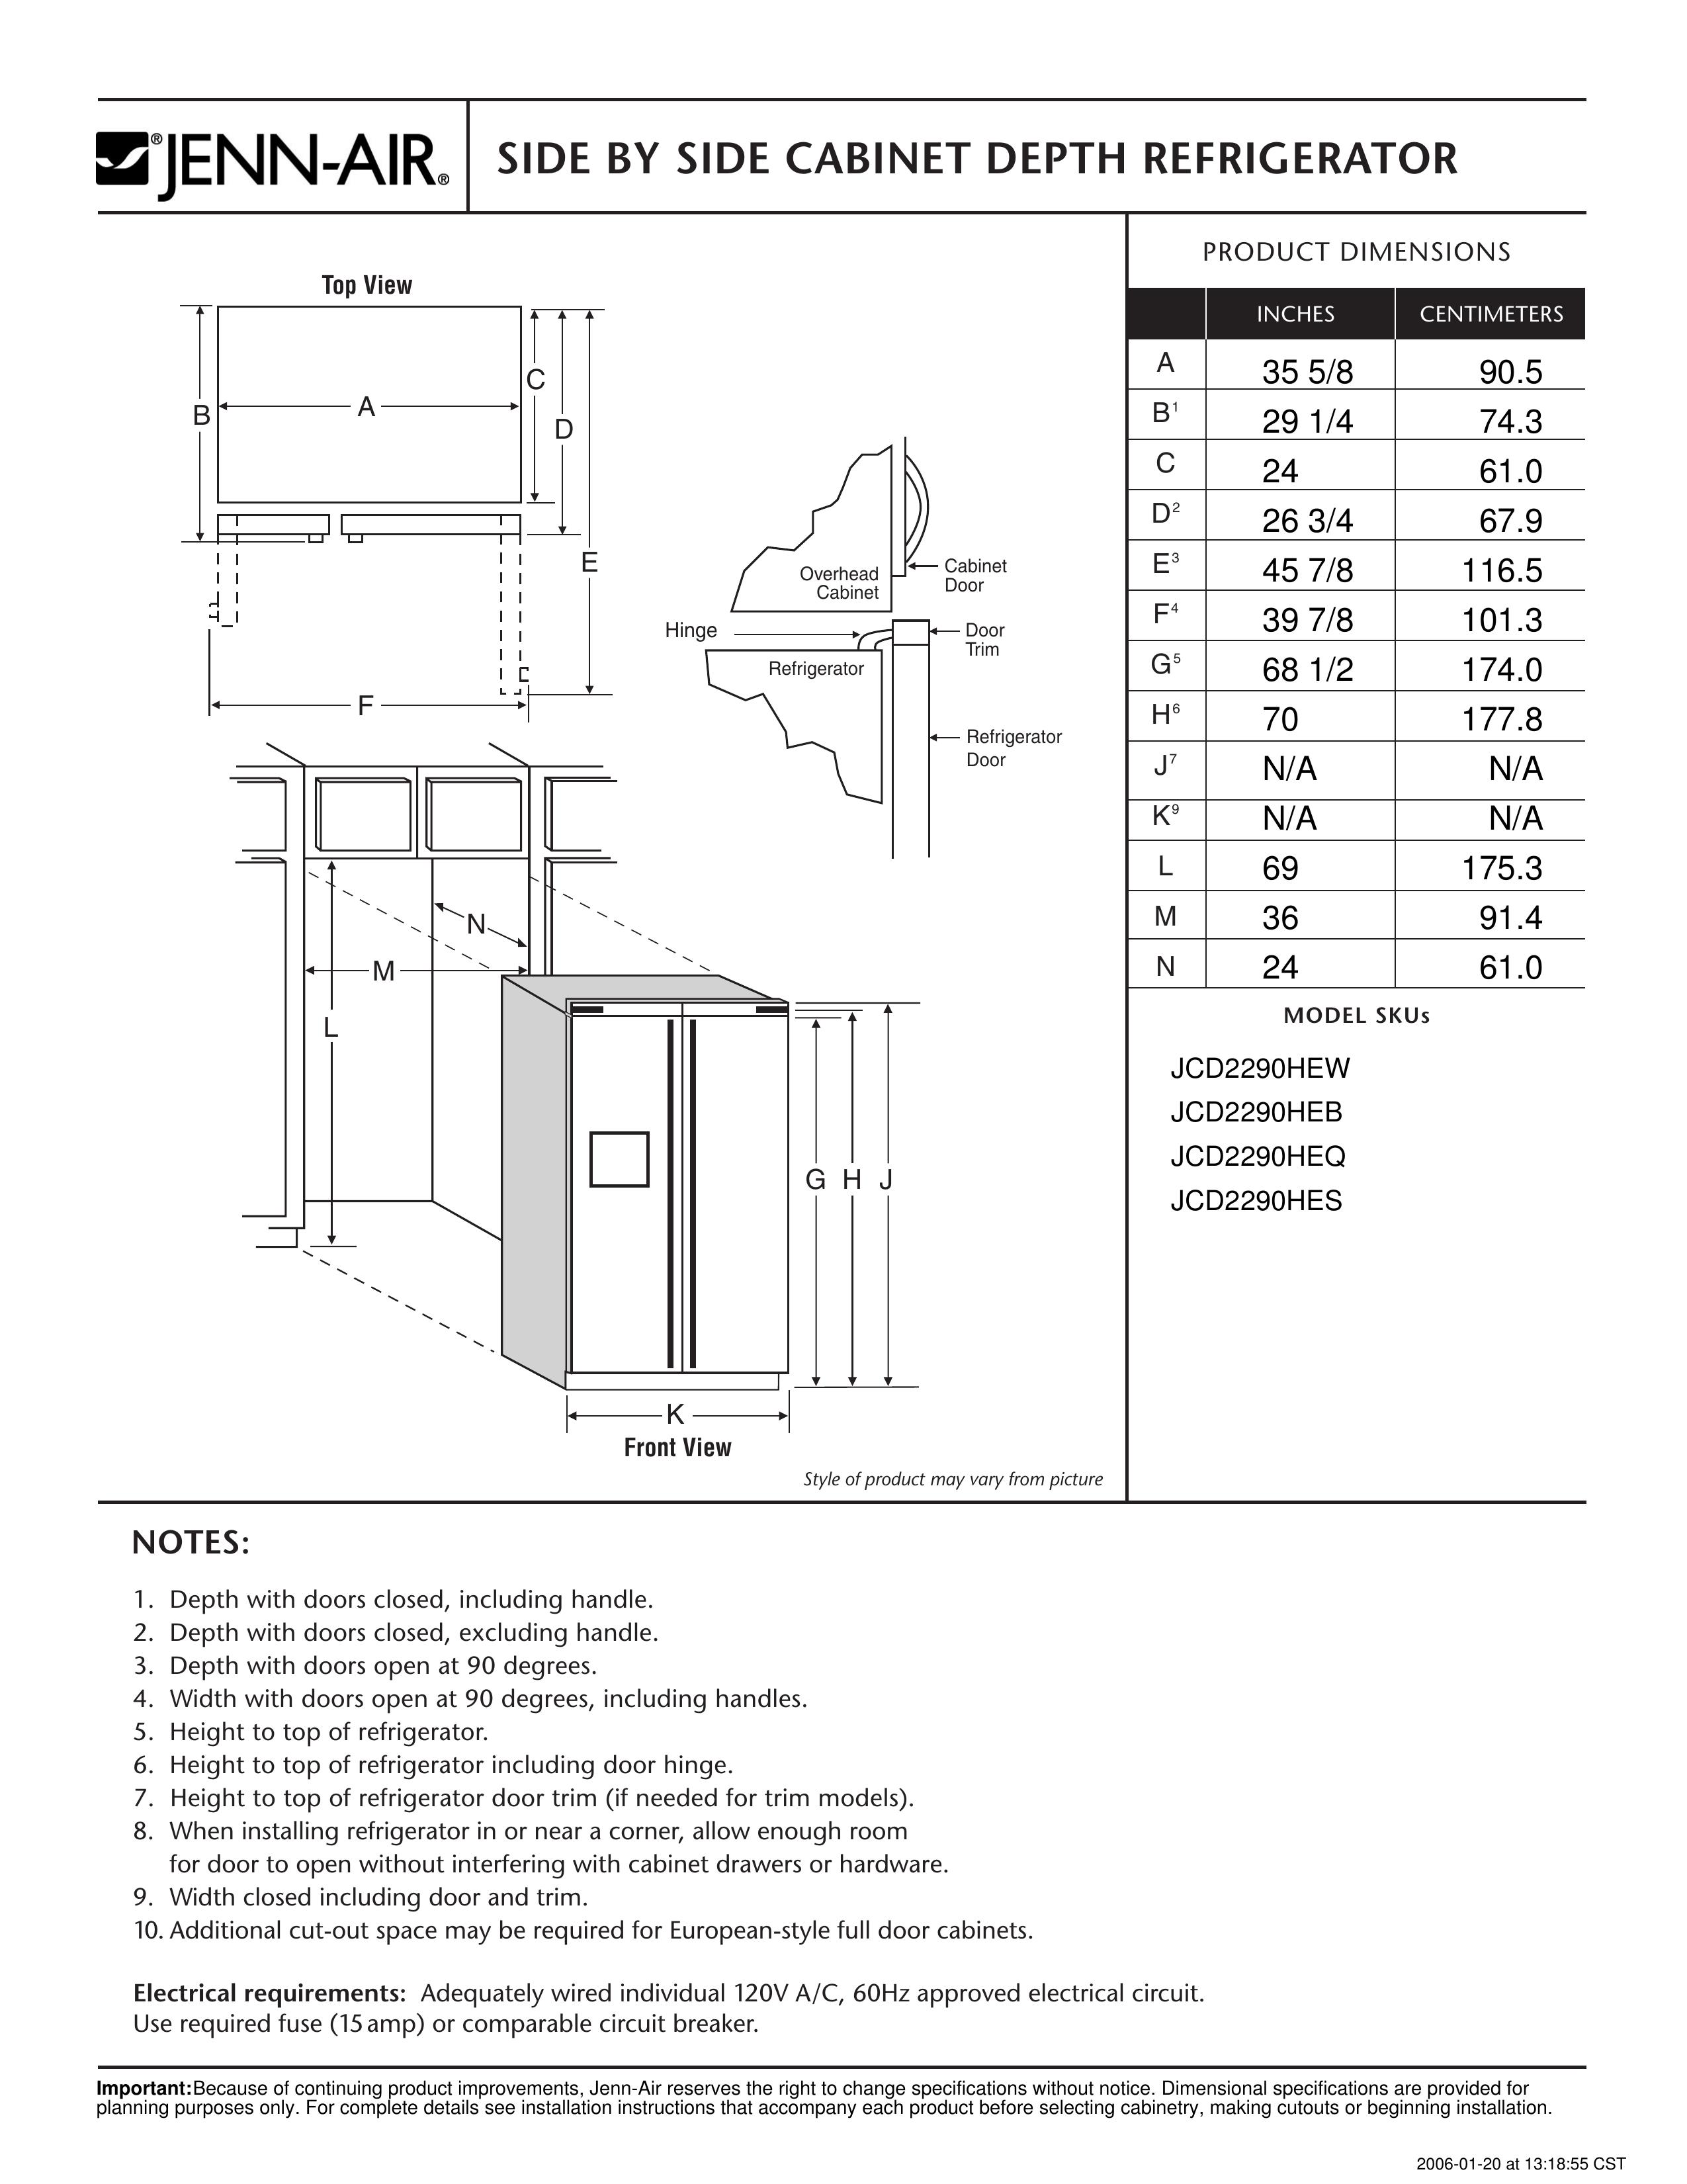 Jenn-Air JCD2290HES Refrigerator User Manual